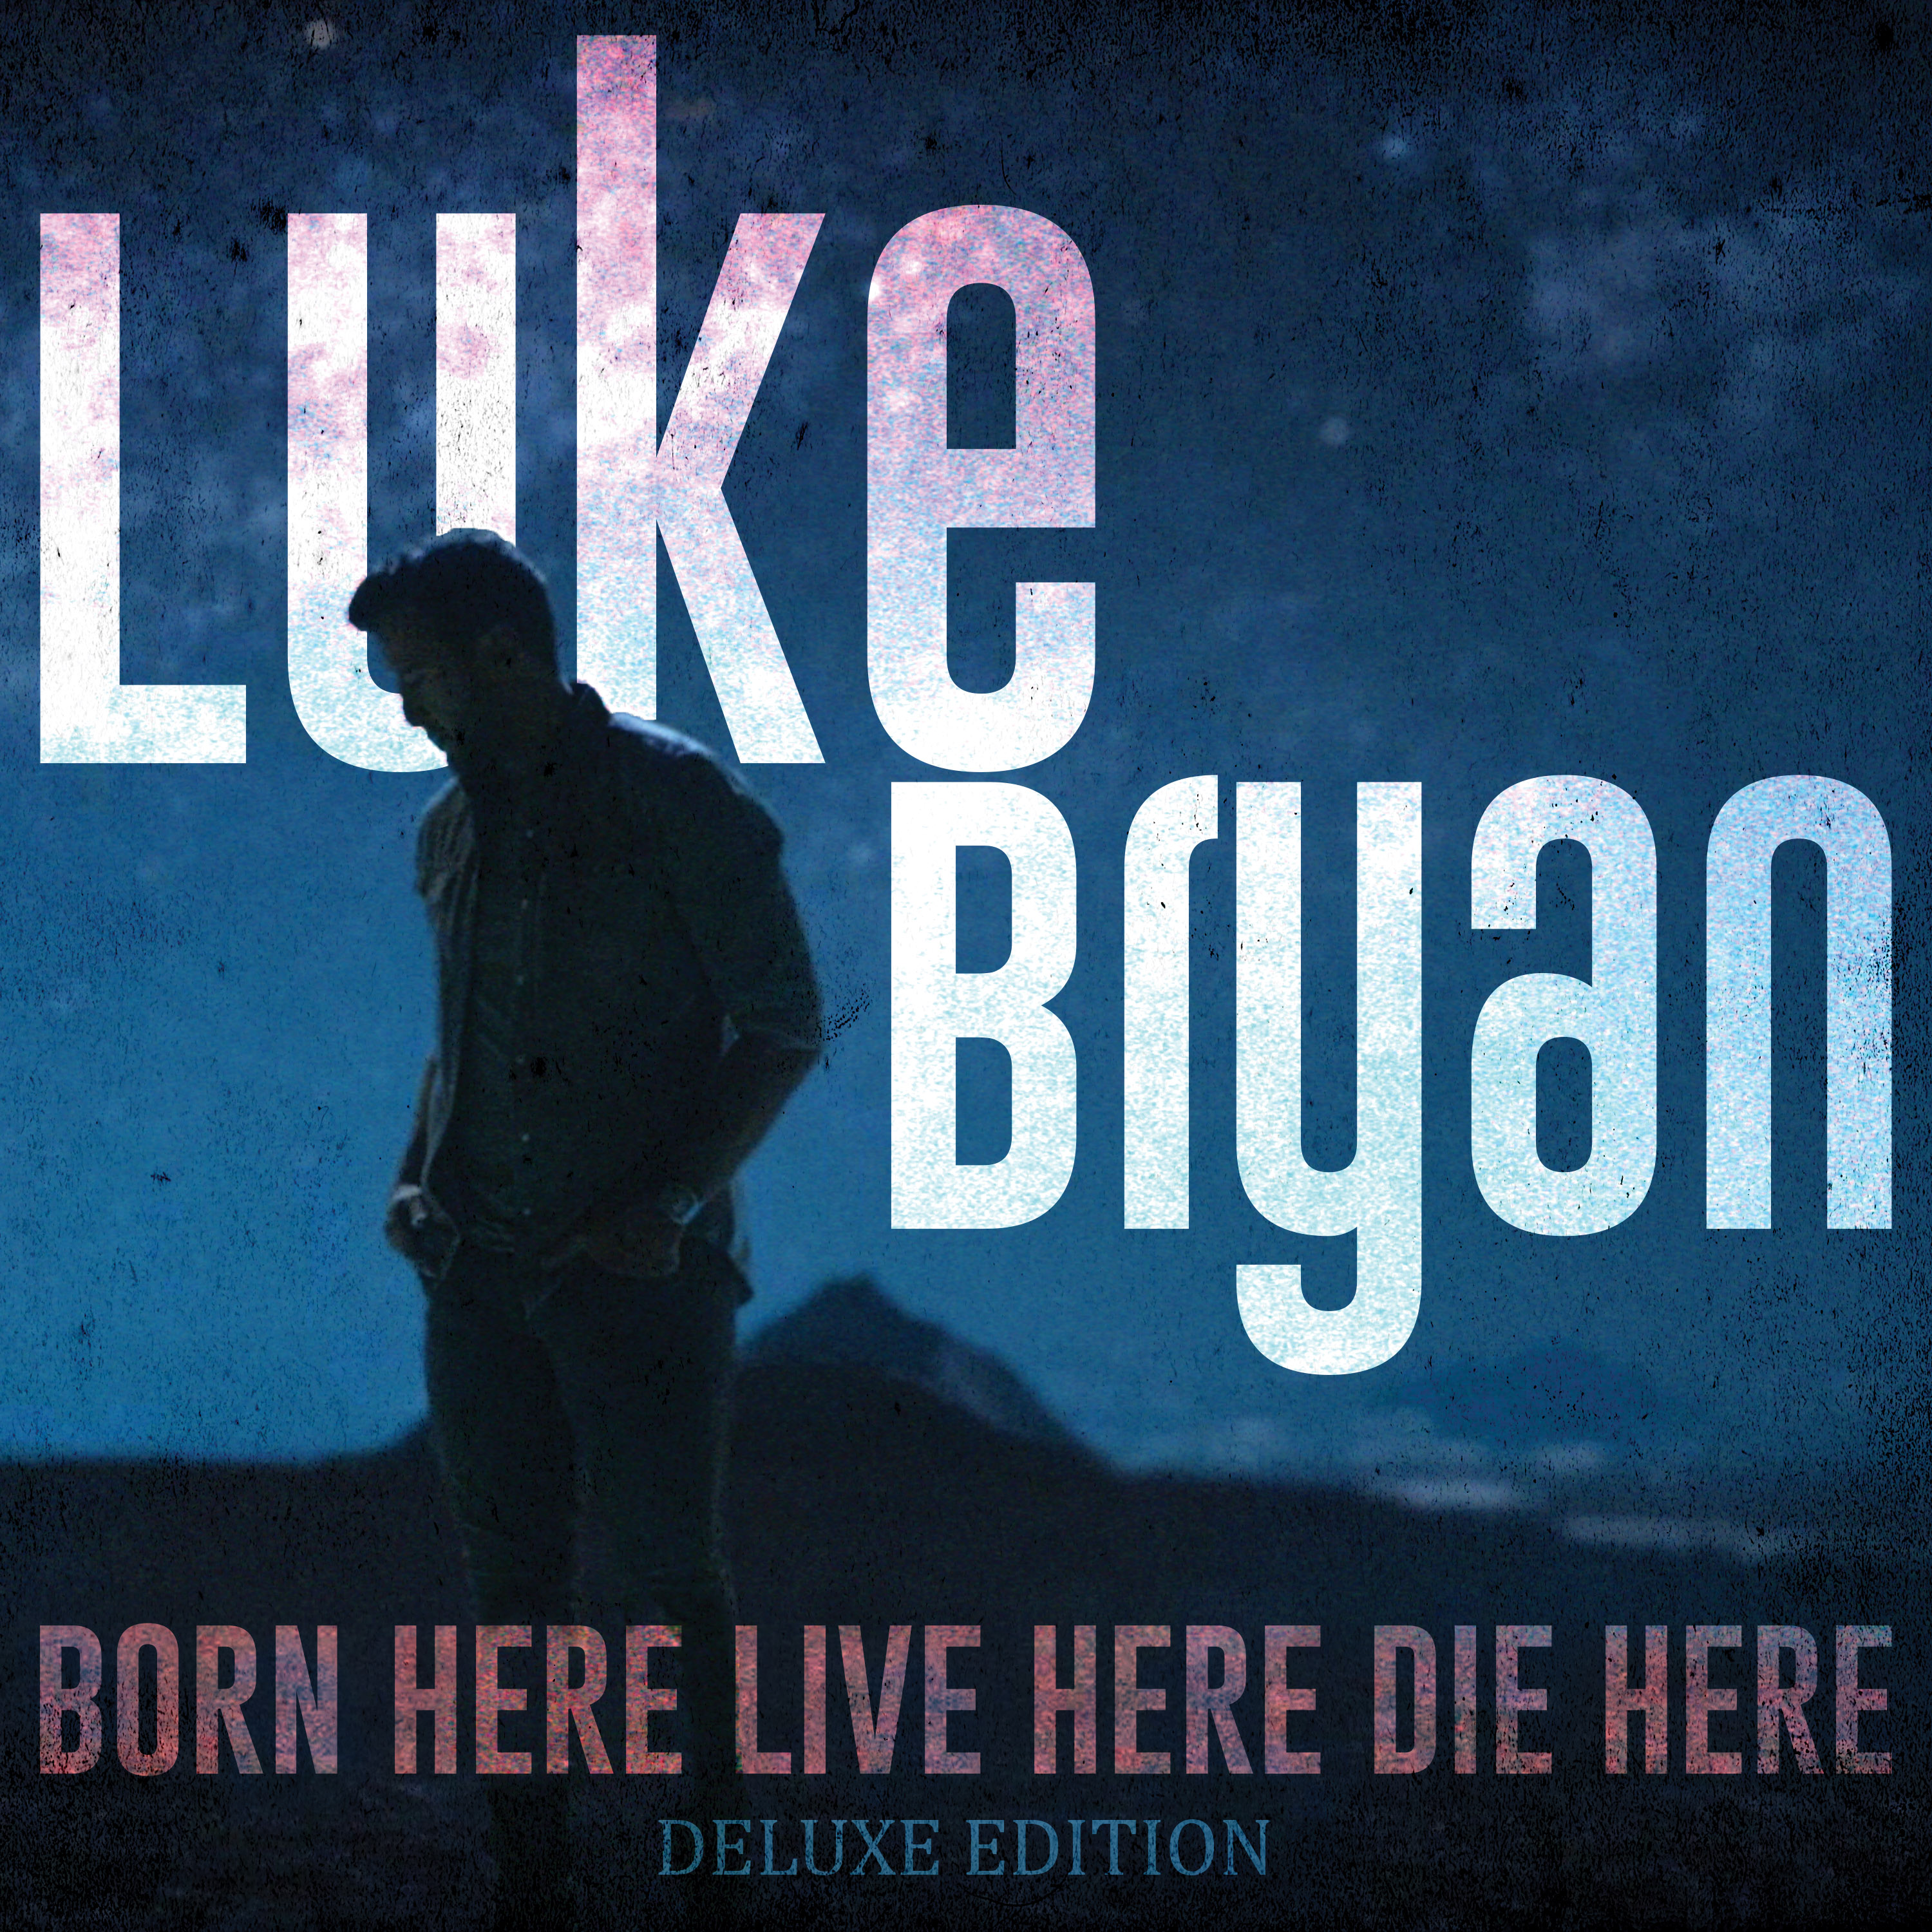 Luke Bryan — Up cover artwork